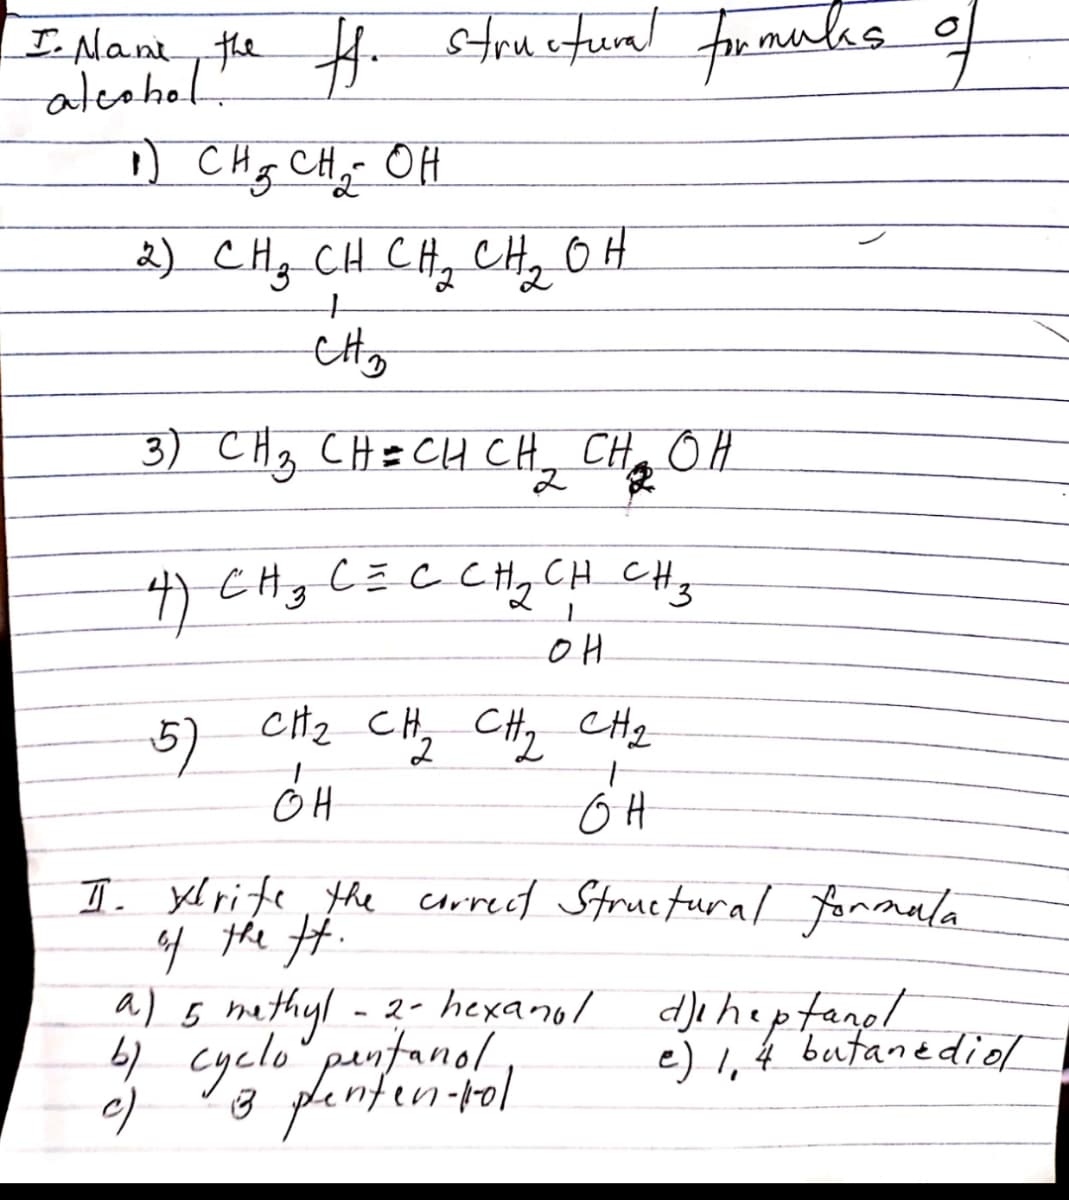 I Nant, the H. steuetual for manlas
frmulas of
ateahol.
D CHg CH, OH
2) CH; CH CH, CH, OH
to
3) CHg CH= CH CH,
CH OH
4) CHg C=C CHqCH CHz
5)
cH2 CH, CHy CHq
I. yl rite, the crrect Structural fonrmala
4 the #.
- 2- hexanol dJaheptanel
a) 5 mathyl
4 cyclo pnfanol,
a plenfen-ol
fanpl
e) I, 4 butanediol
